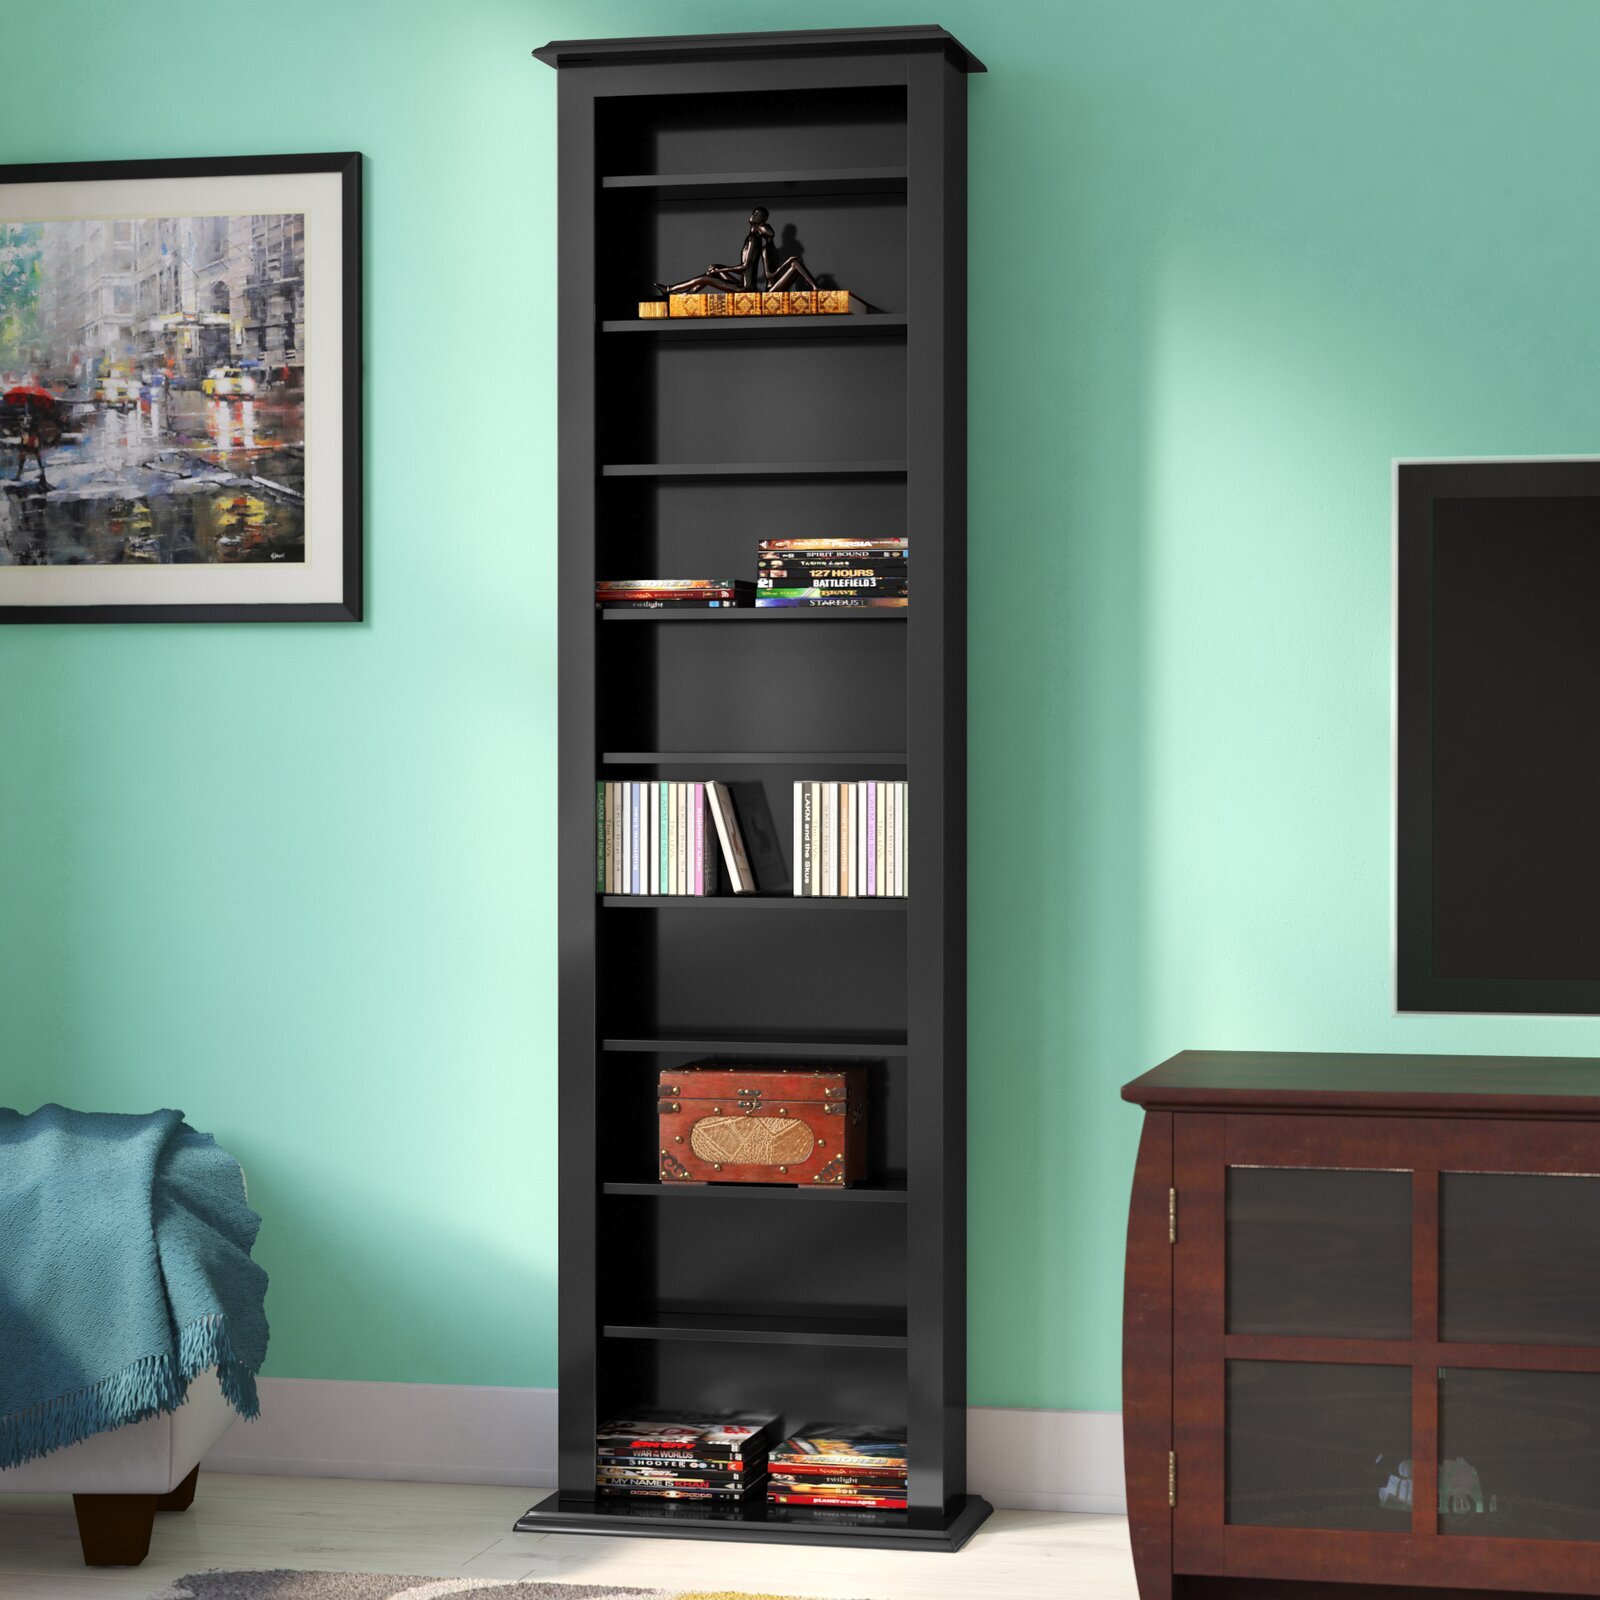 Create a Bookshelf with a Narrow Stereo Cabinet